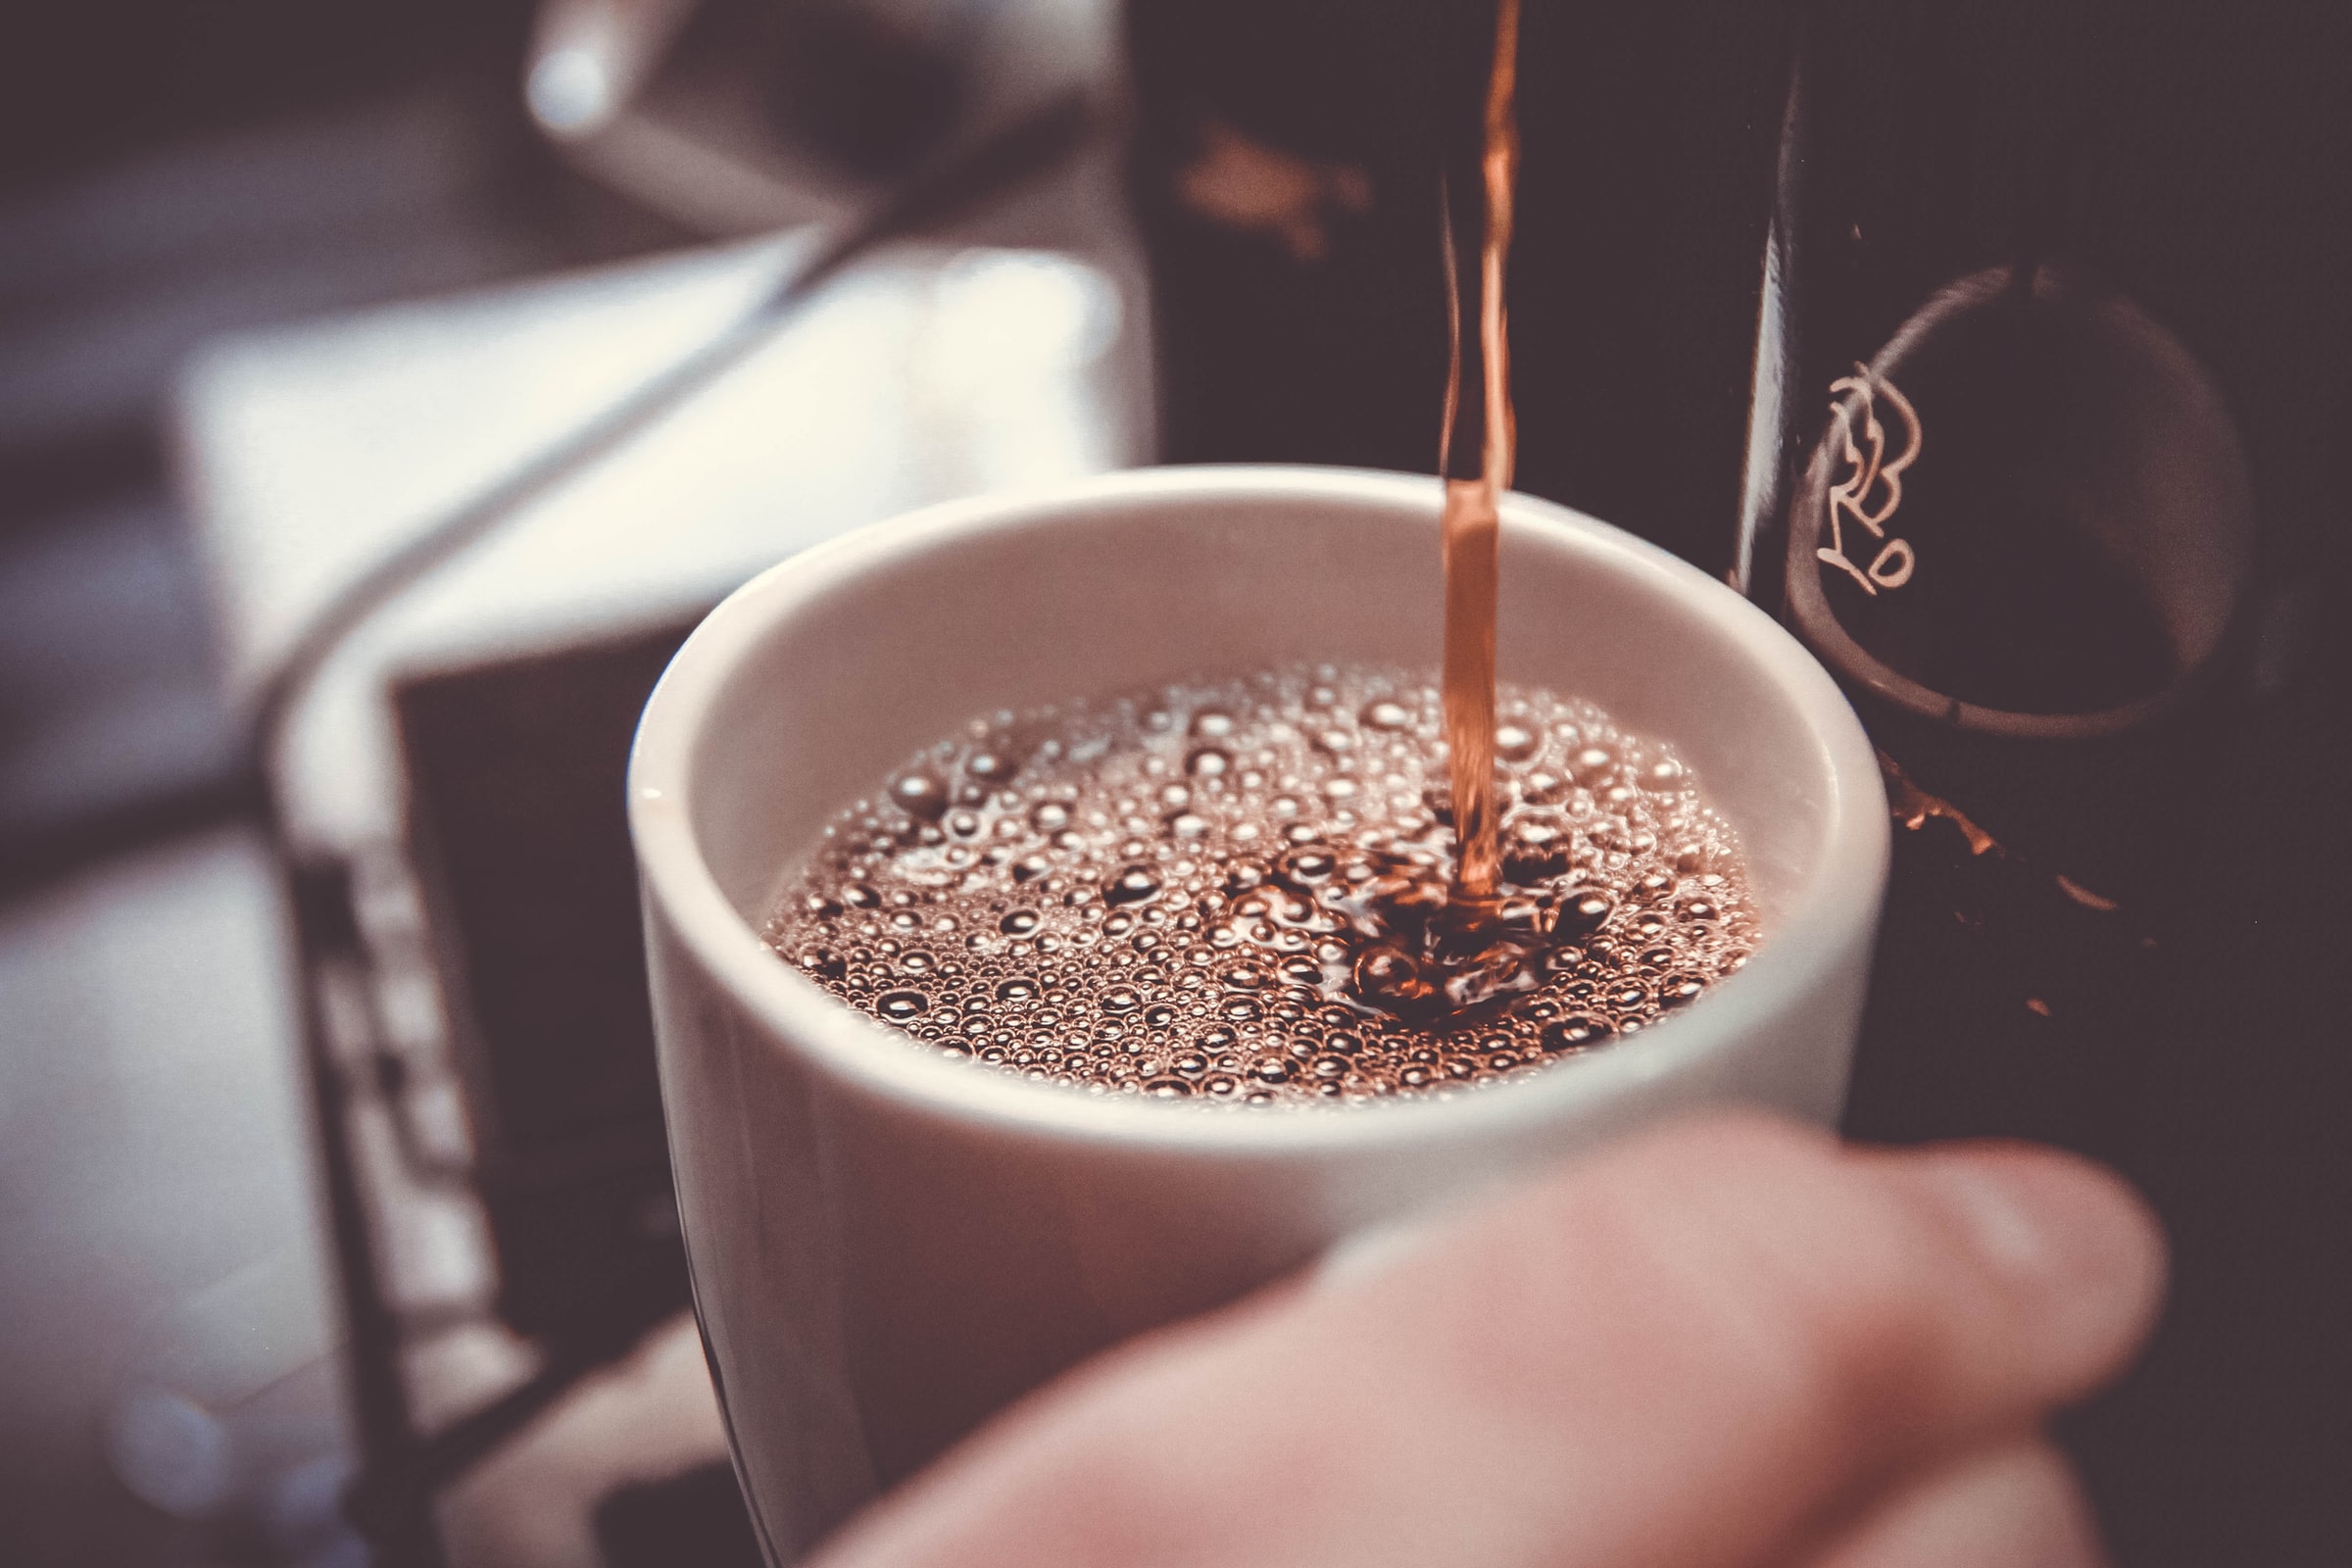 Best Coffee Maker under $100 - Top 9 Brands Review